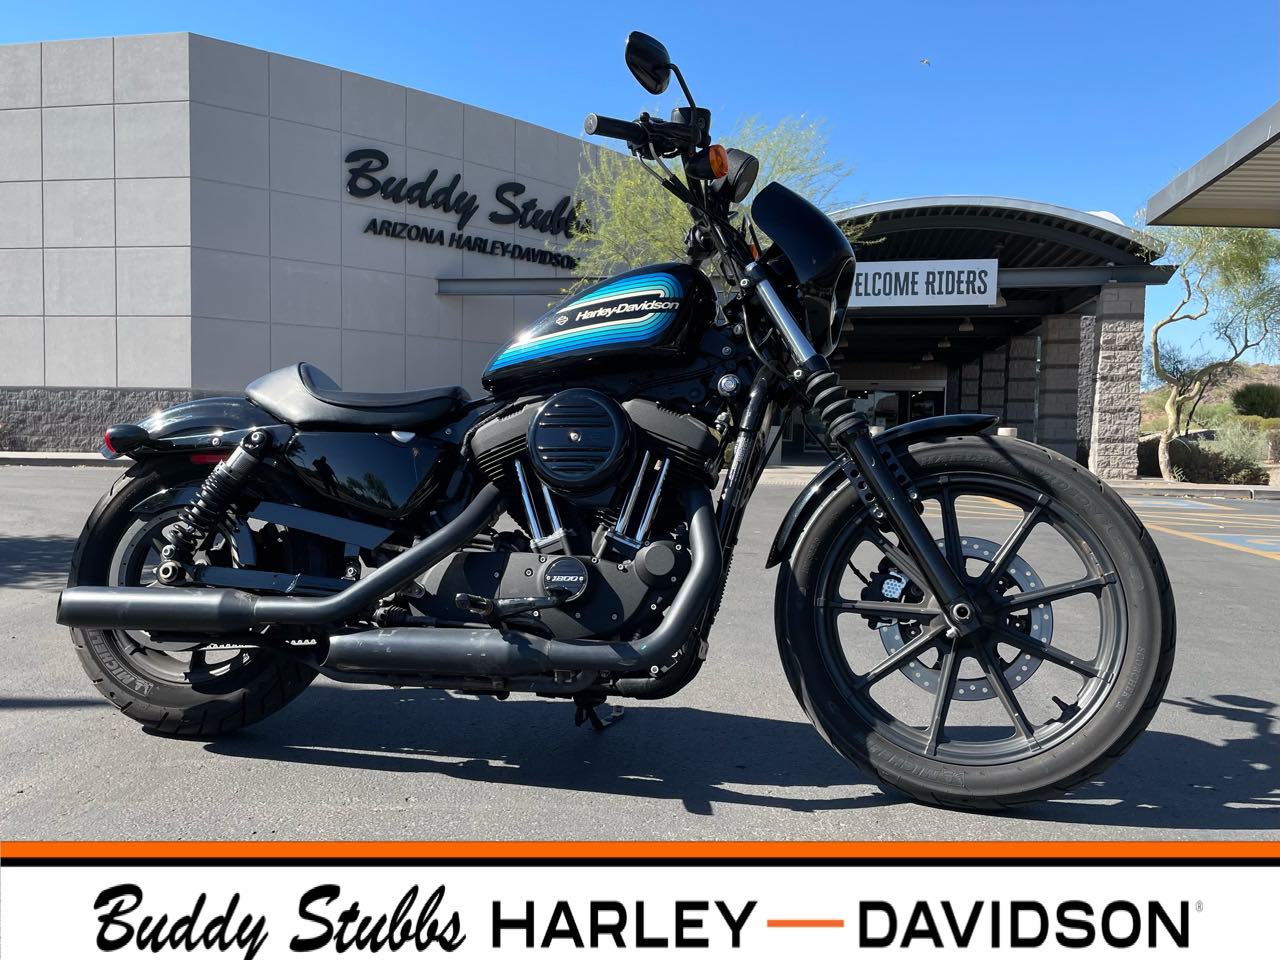 2018 Harley-Davidson Sportster Iron 1200 at Buddy Stubbs Arizona Harley-Davidson